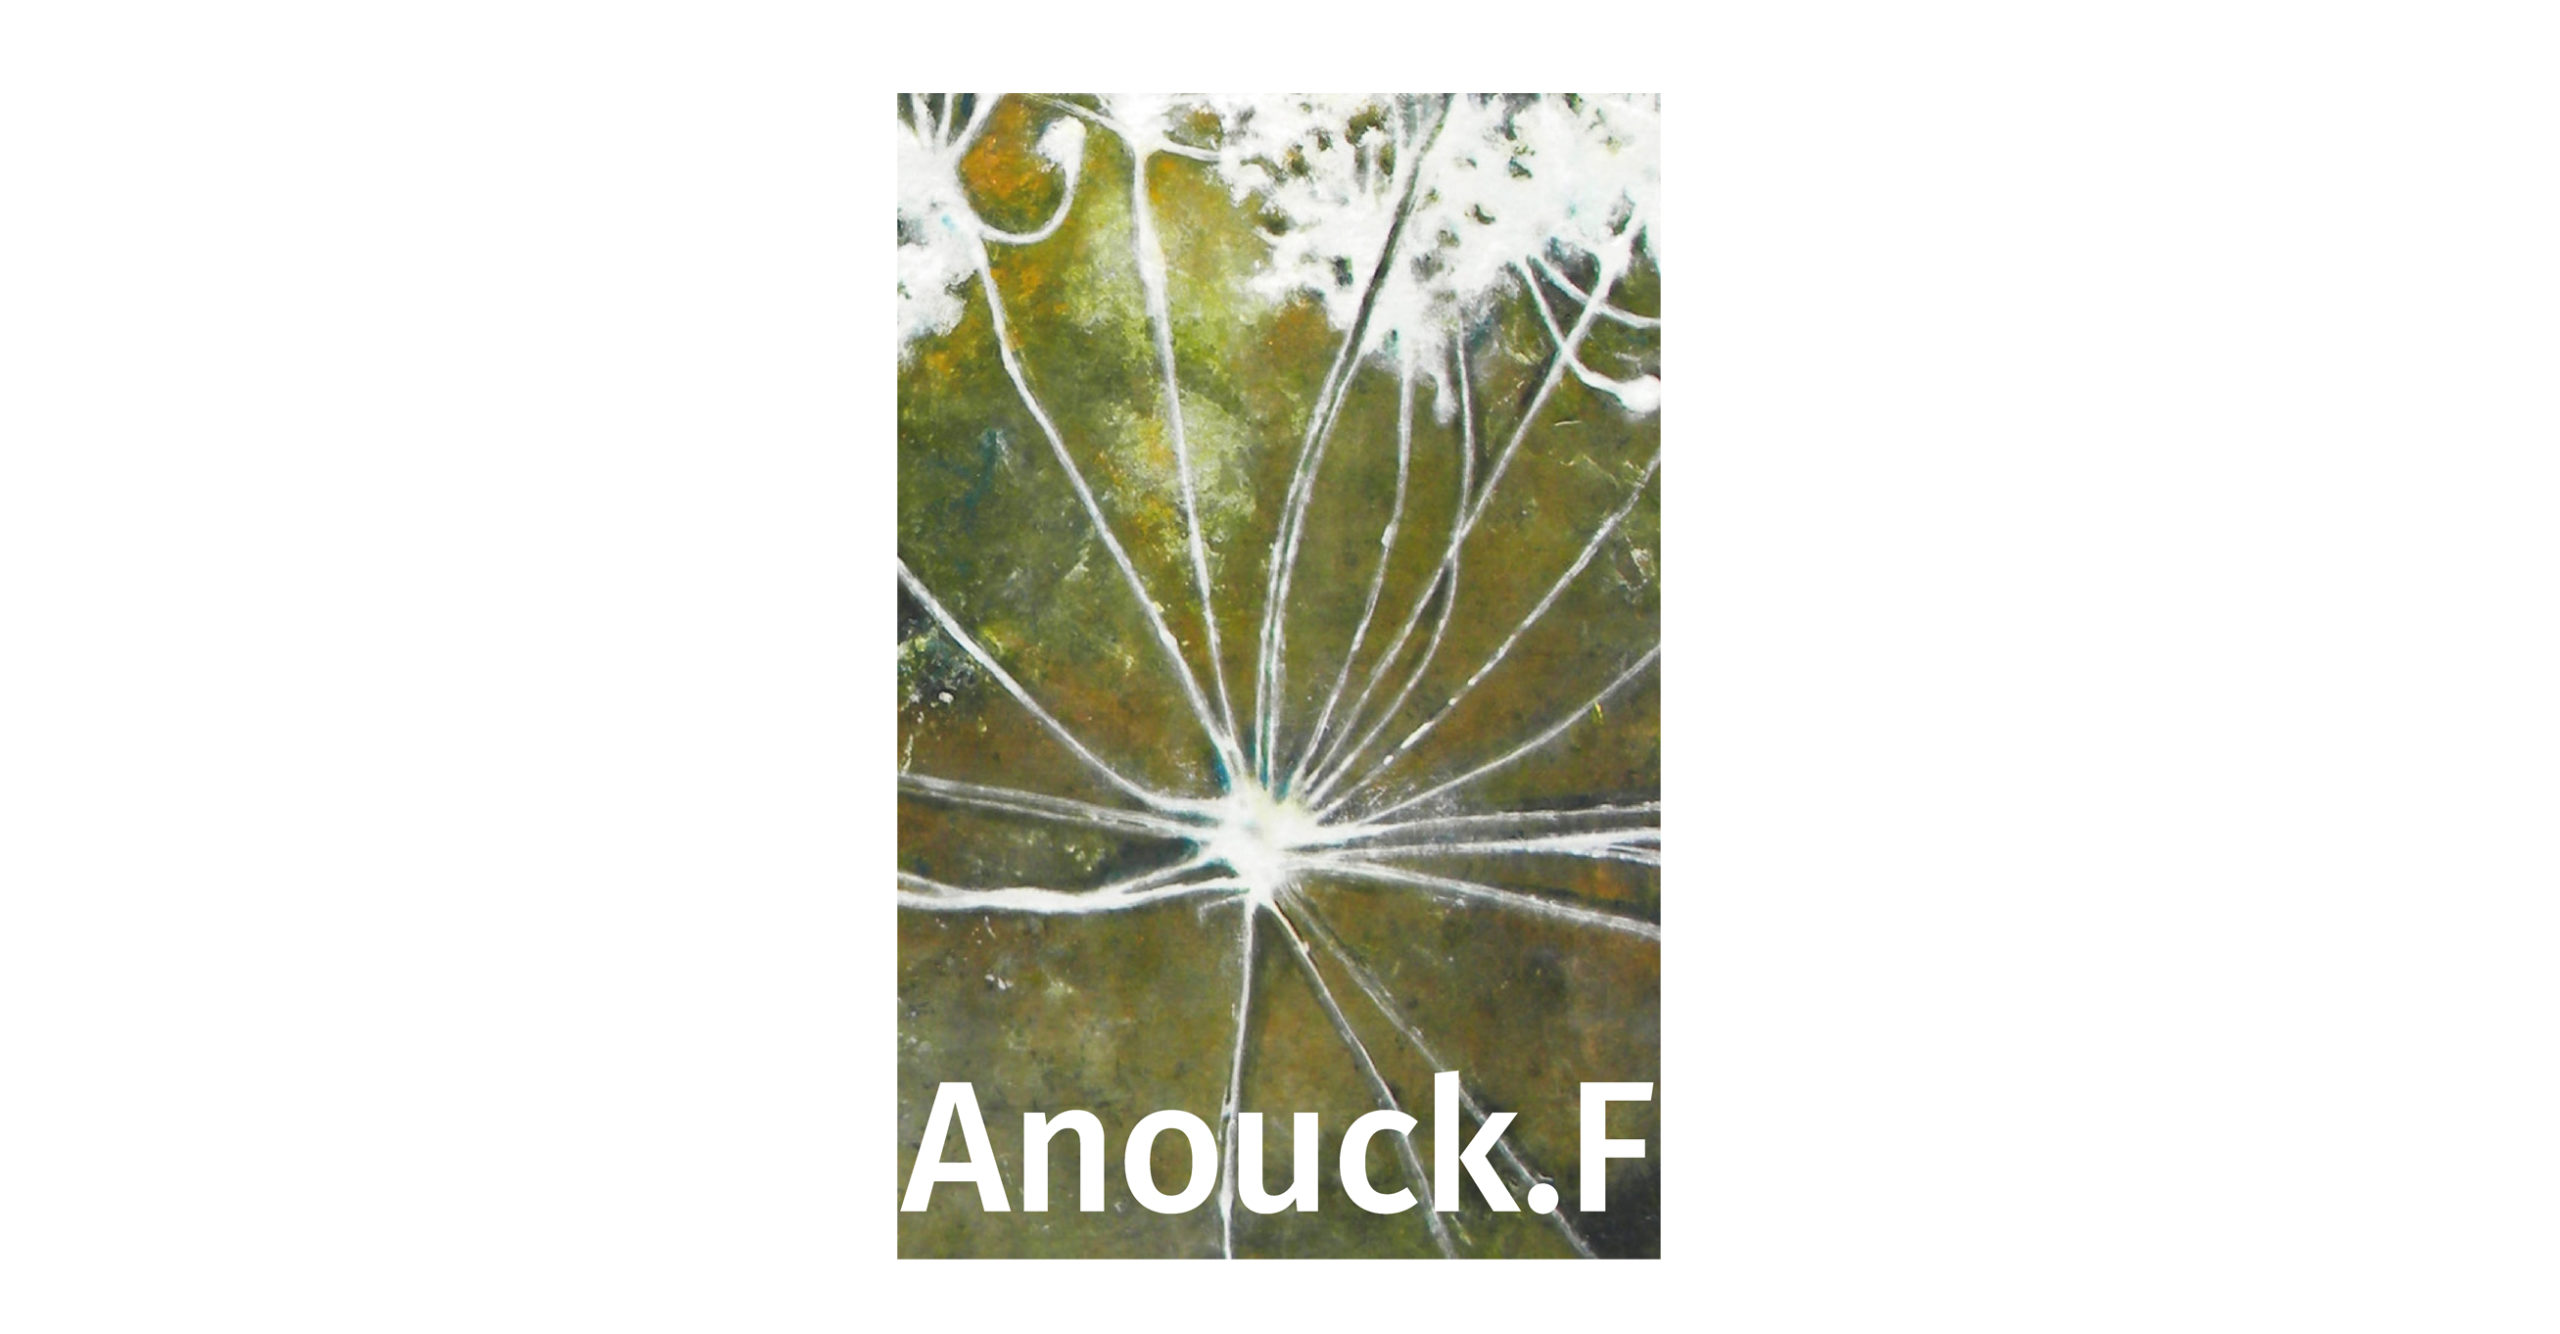 Cartes de visite Anouck.F